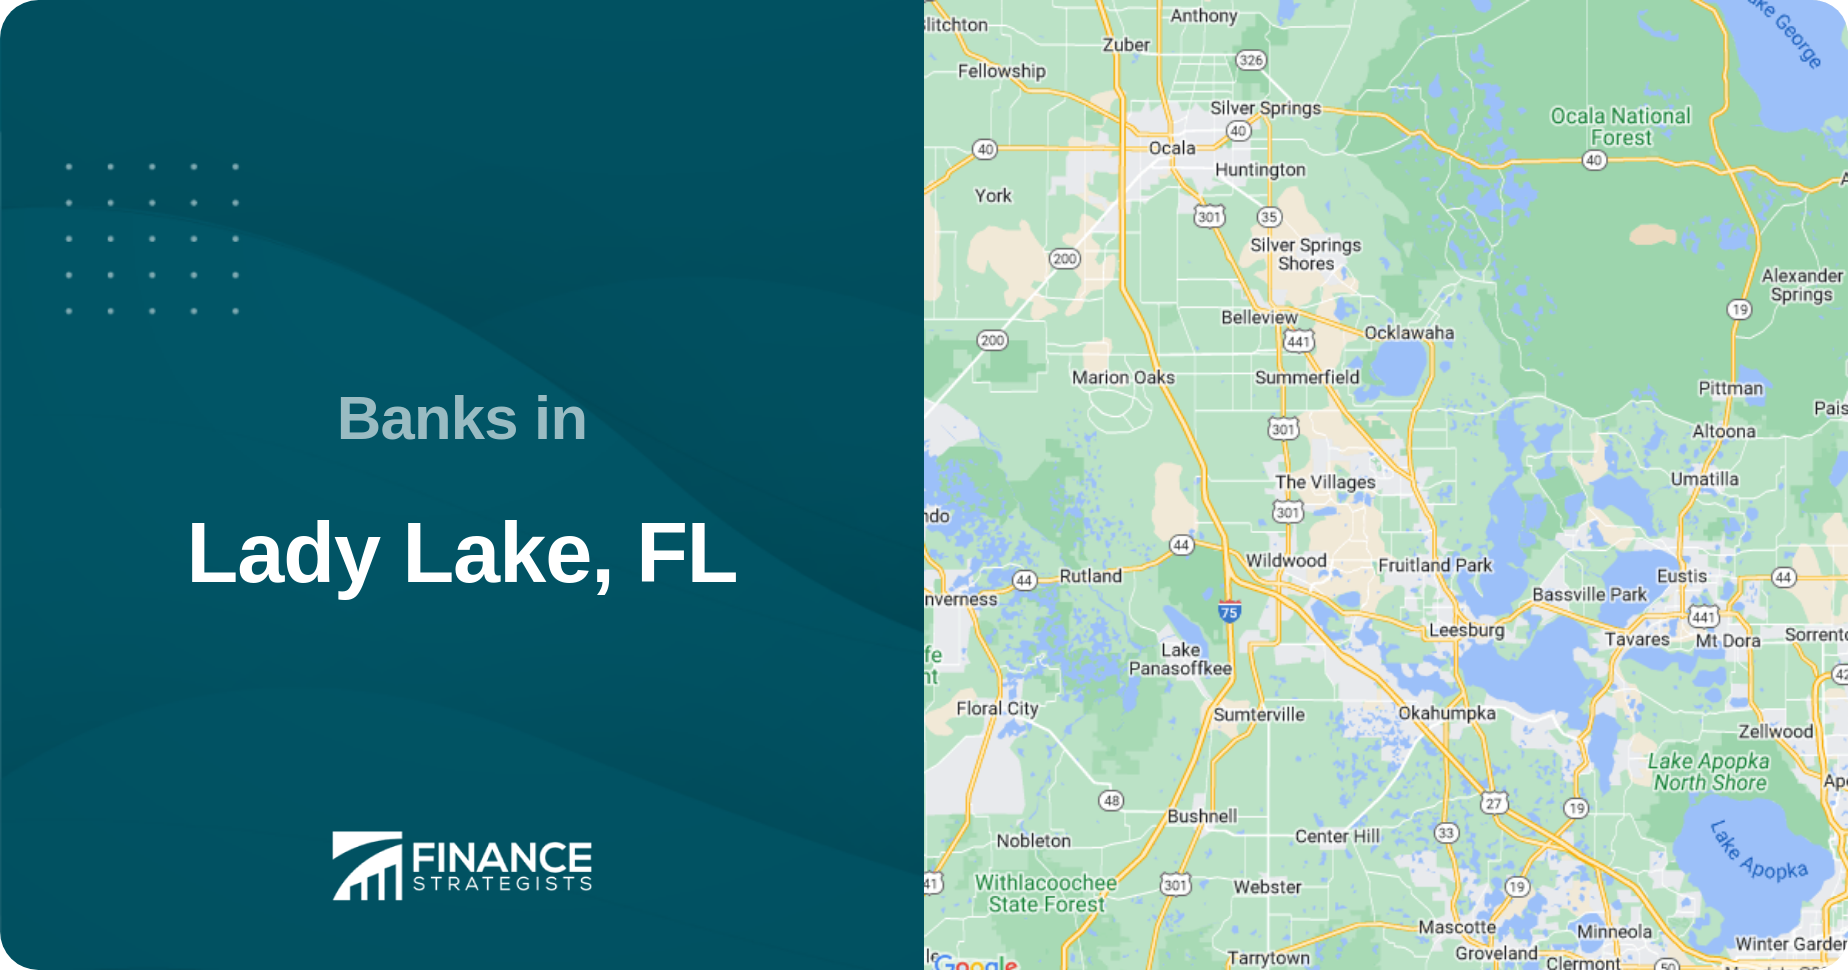 Banks in Lady Lake, FL